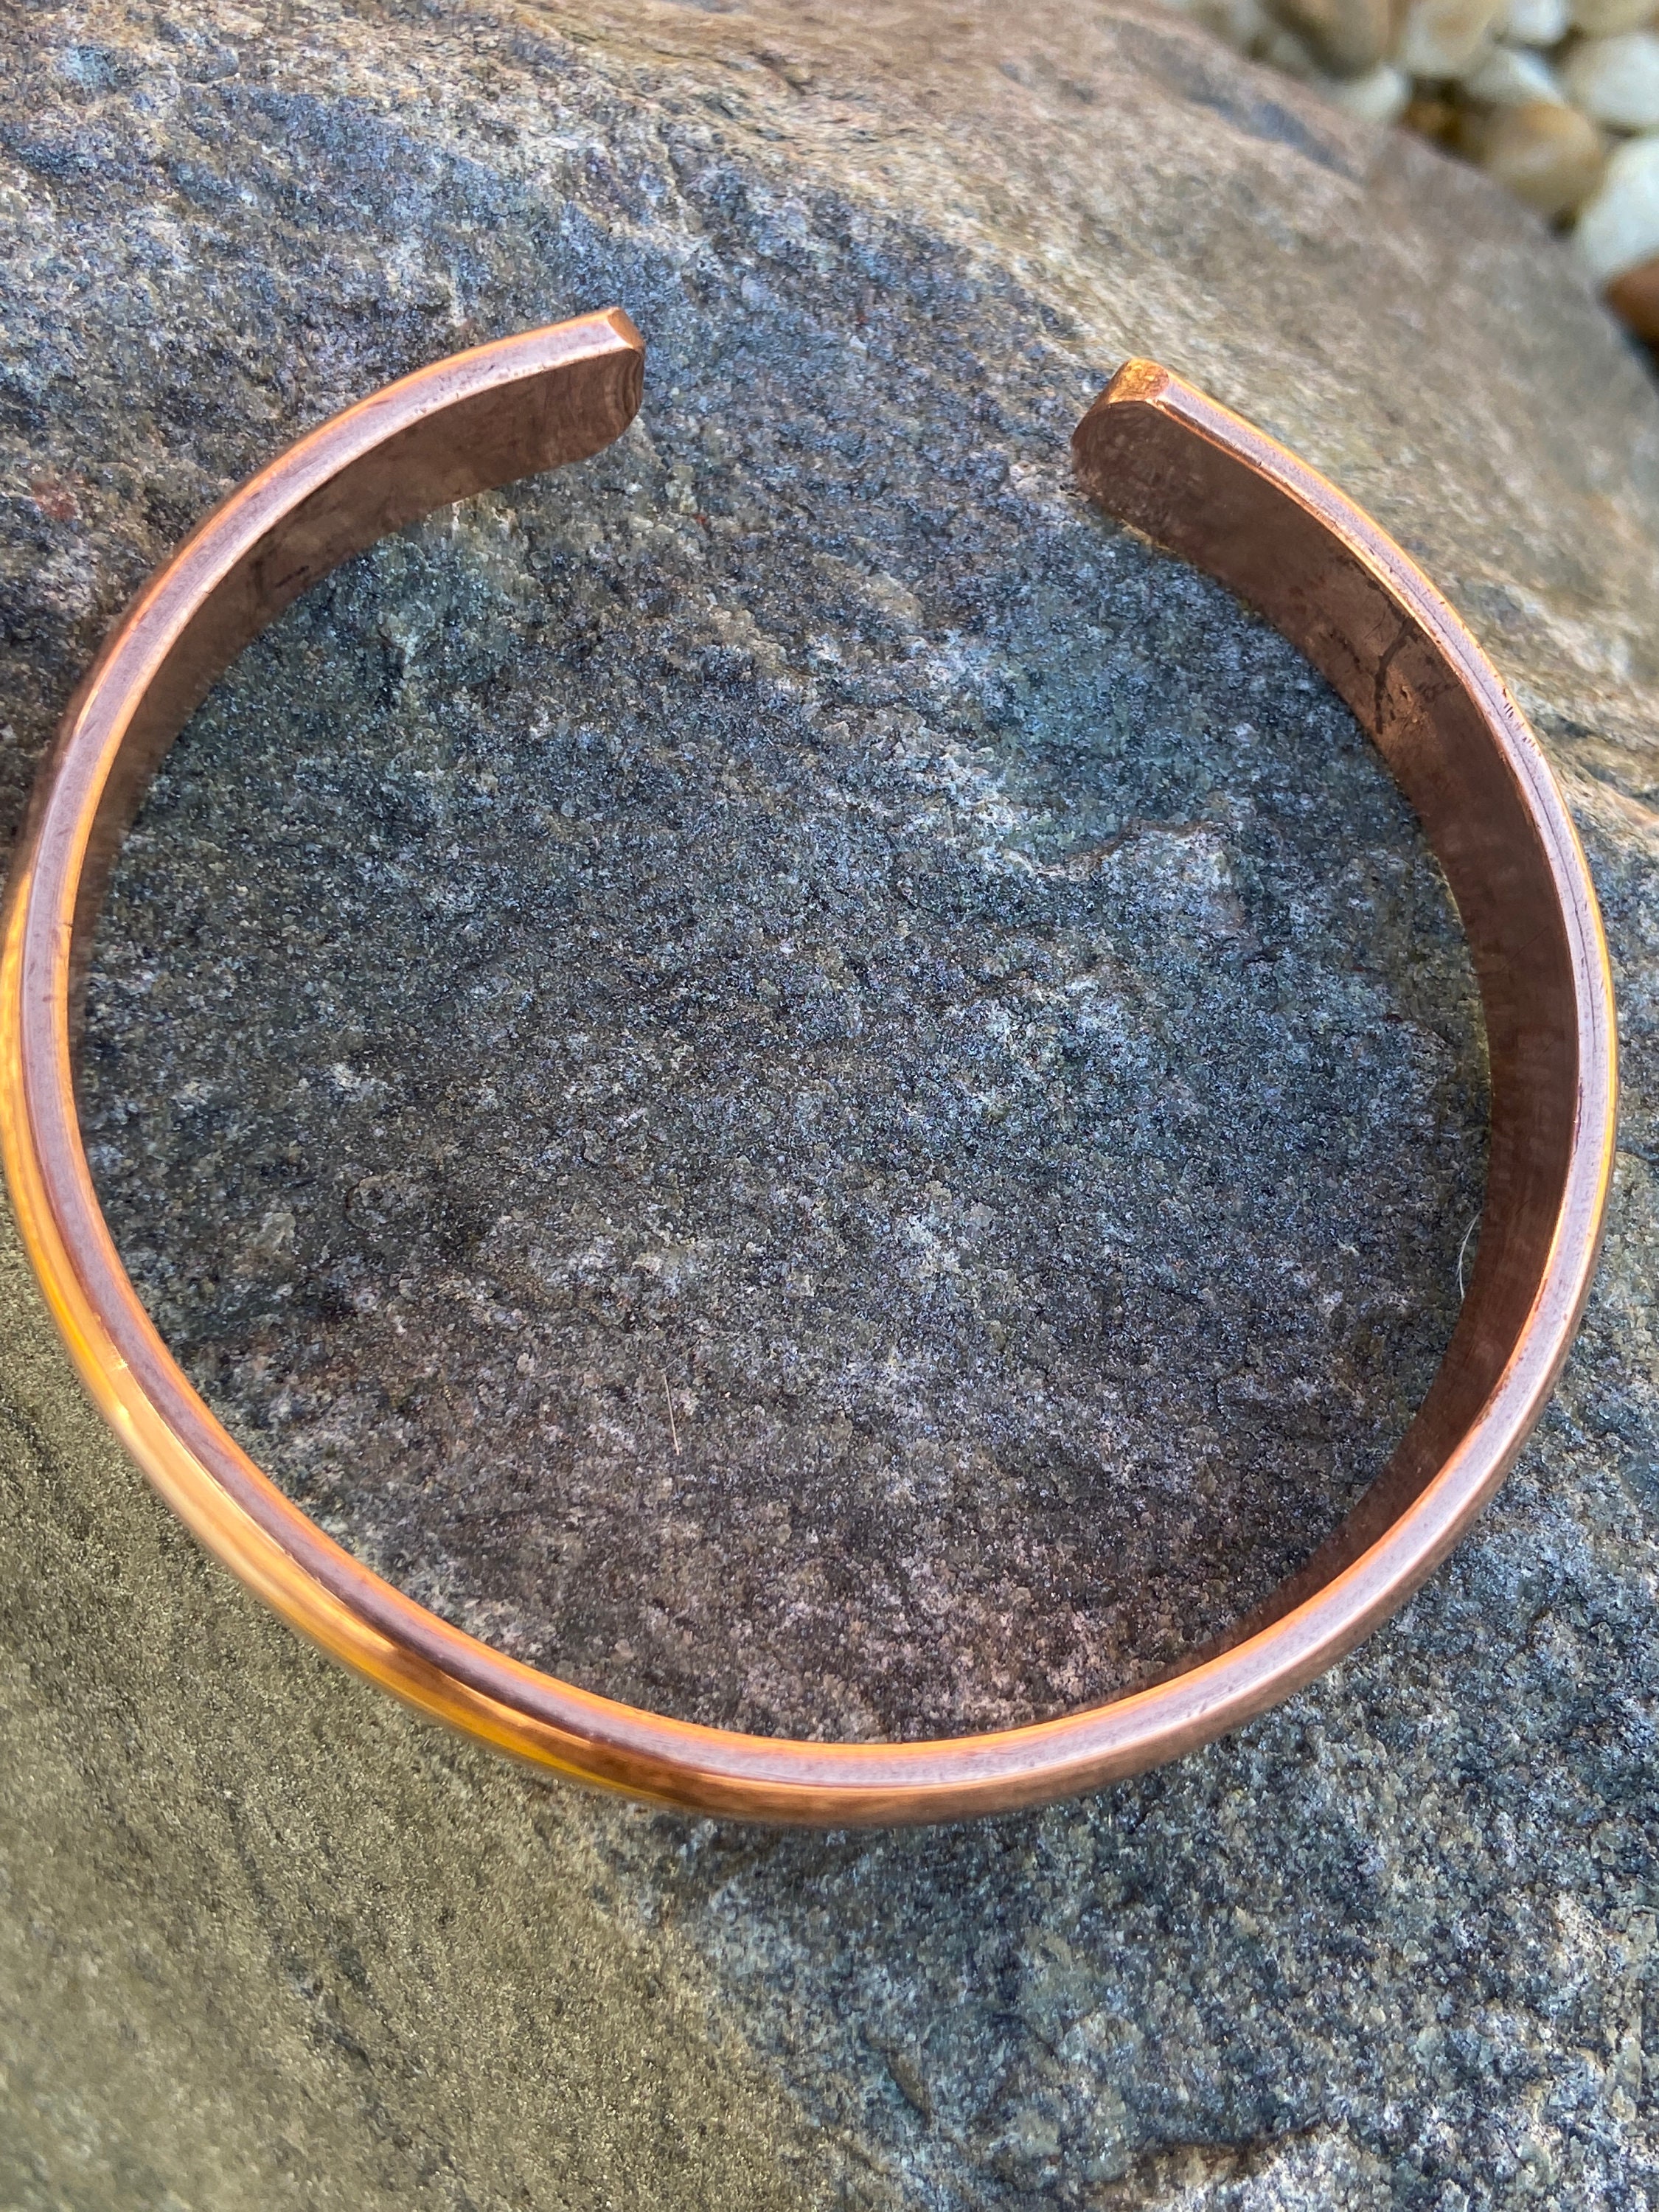 Pure Copper Bracelet Healing Bracelet Copper Cuff Bangle Handmade